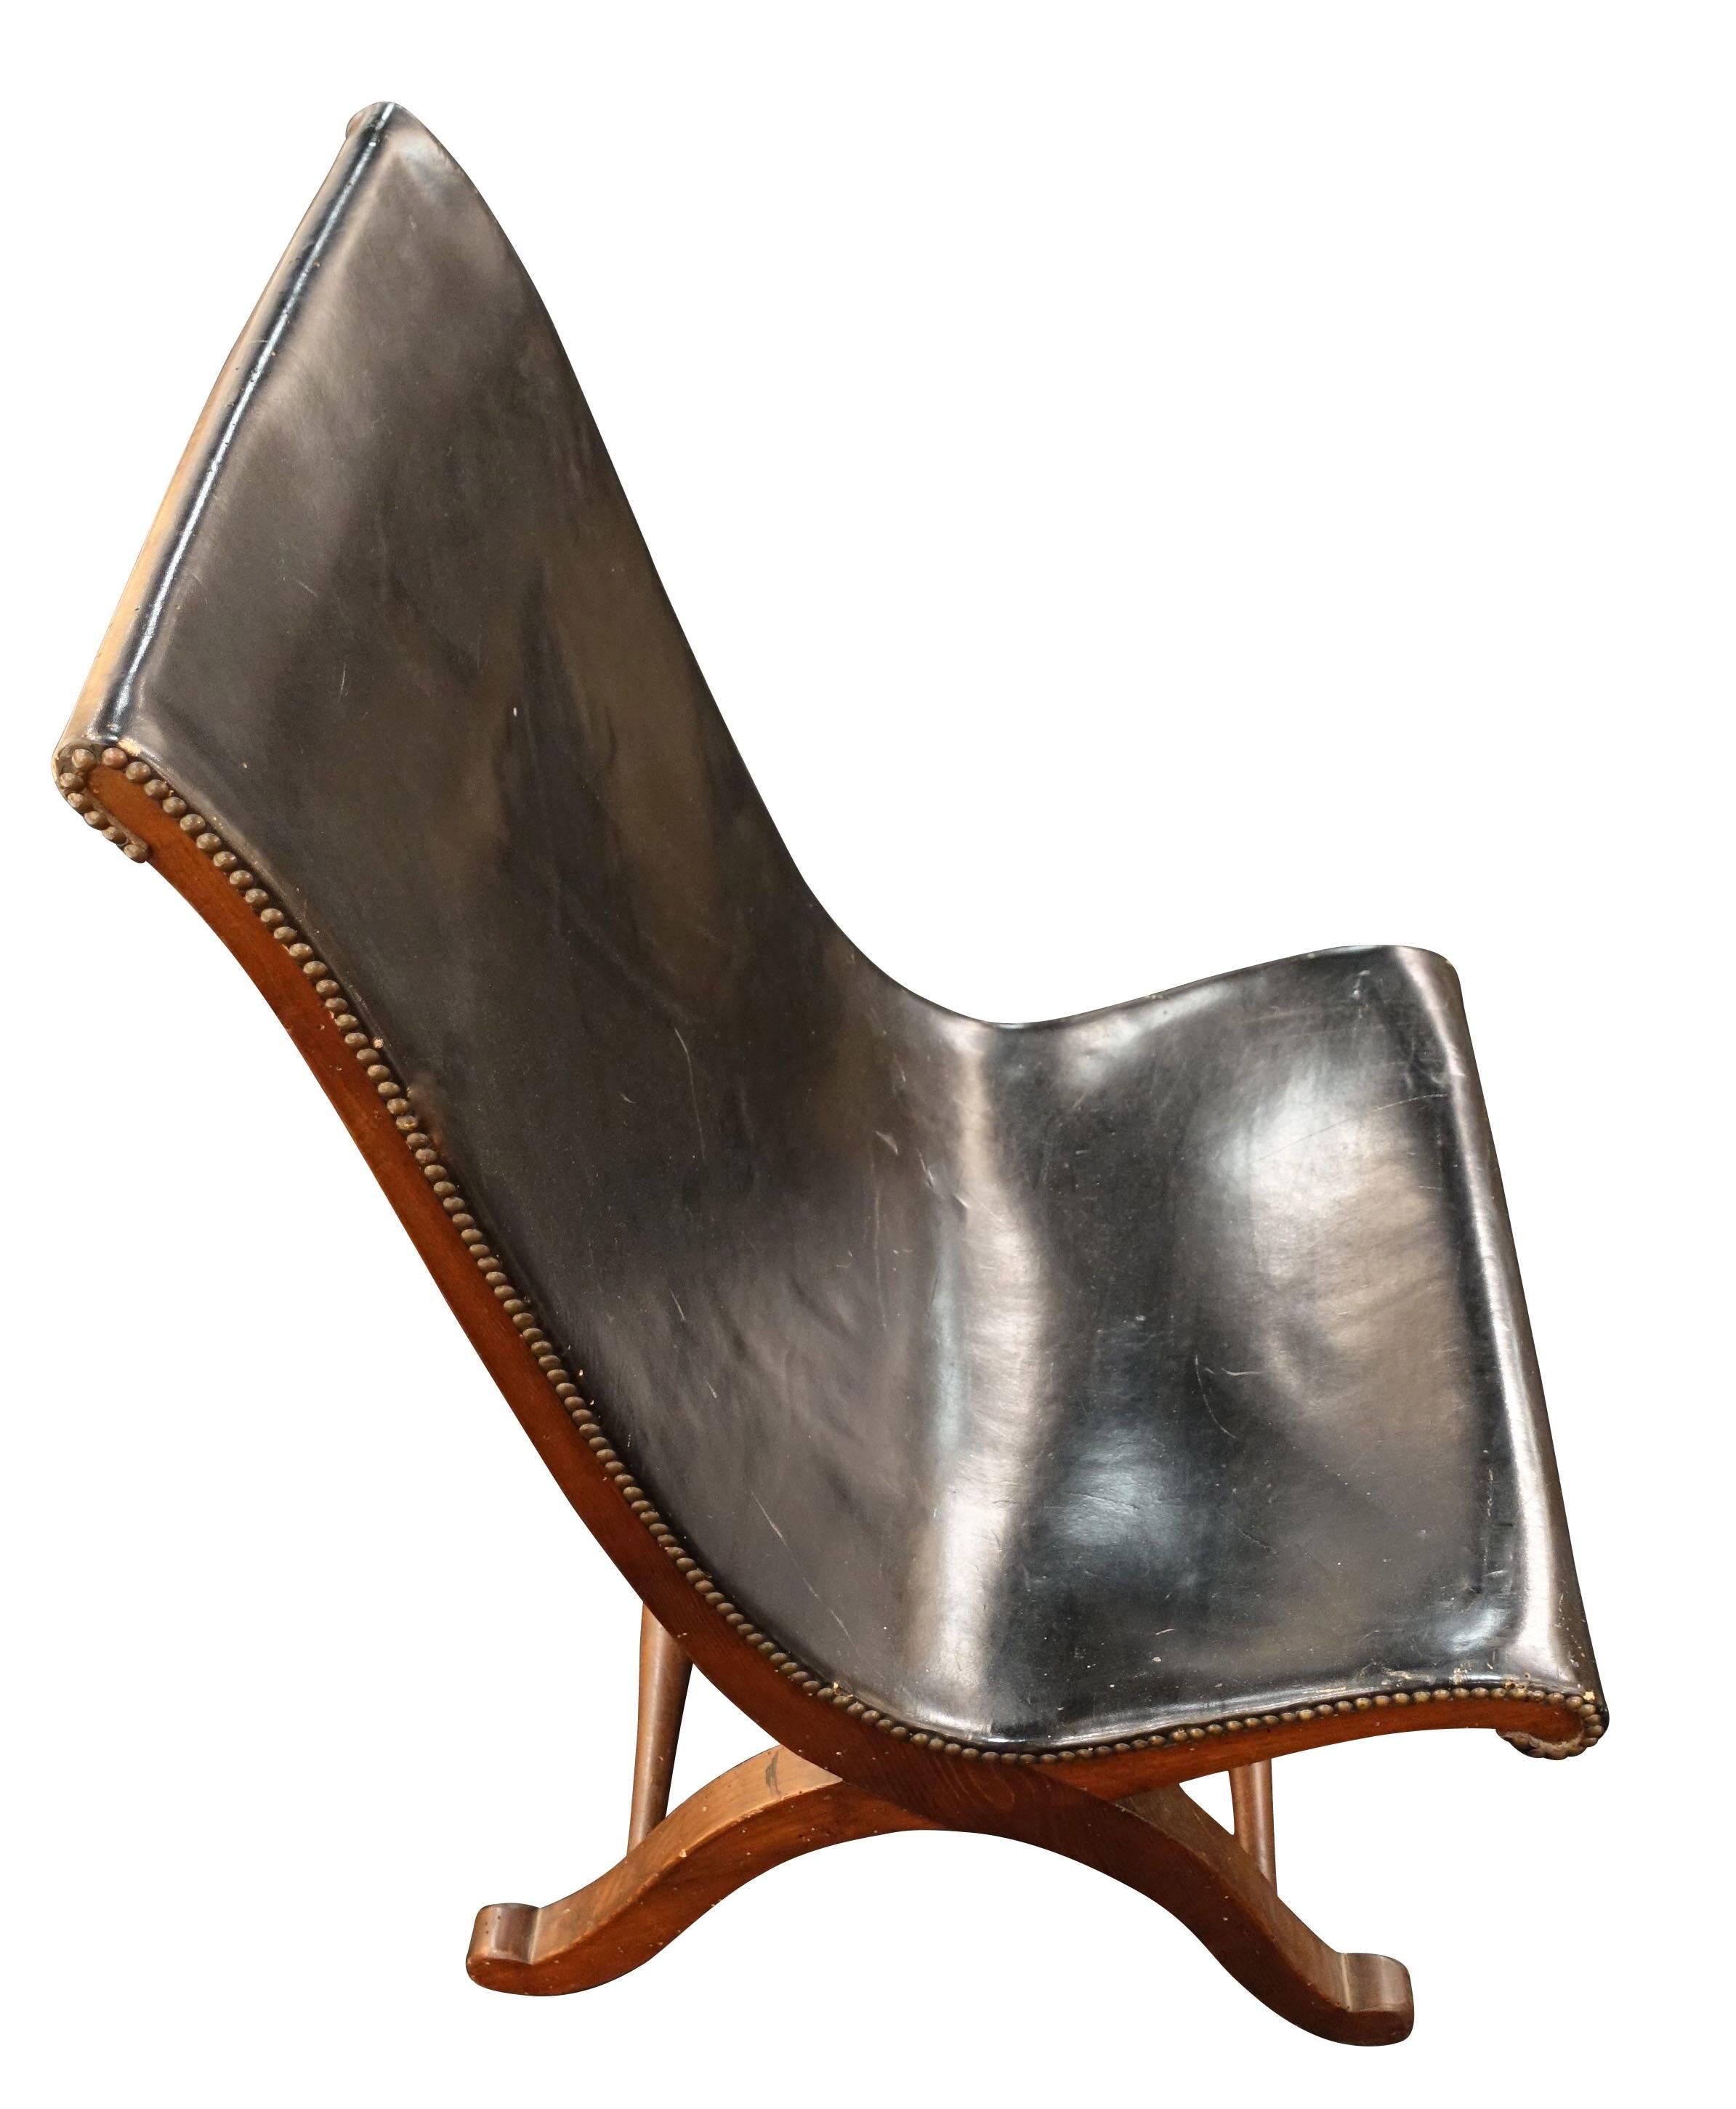 Mid-Century Spanish black leather Valenti side chair.
Signature wood base.
Very comfortable.
